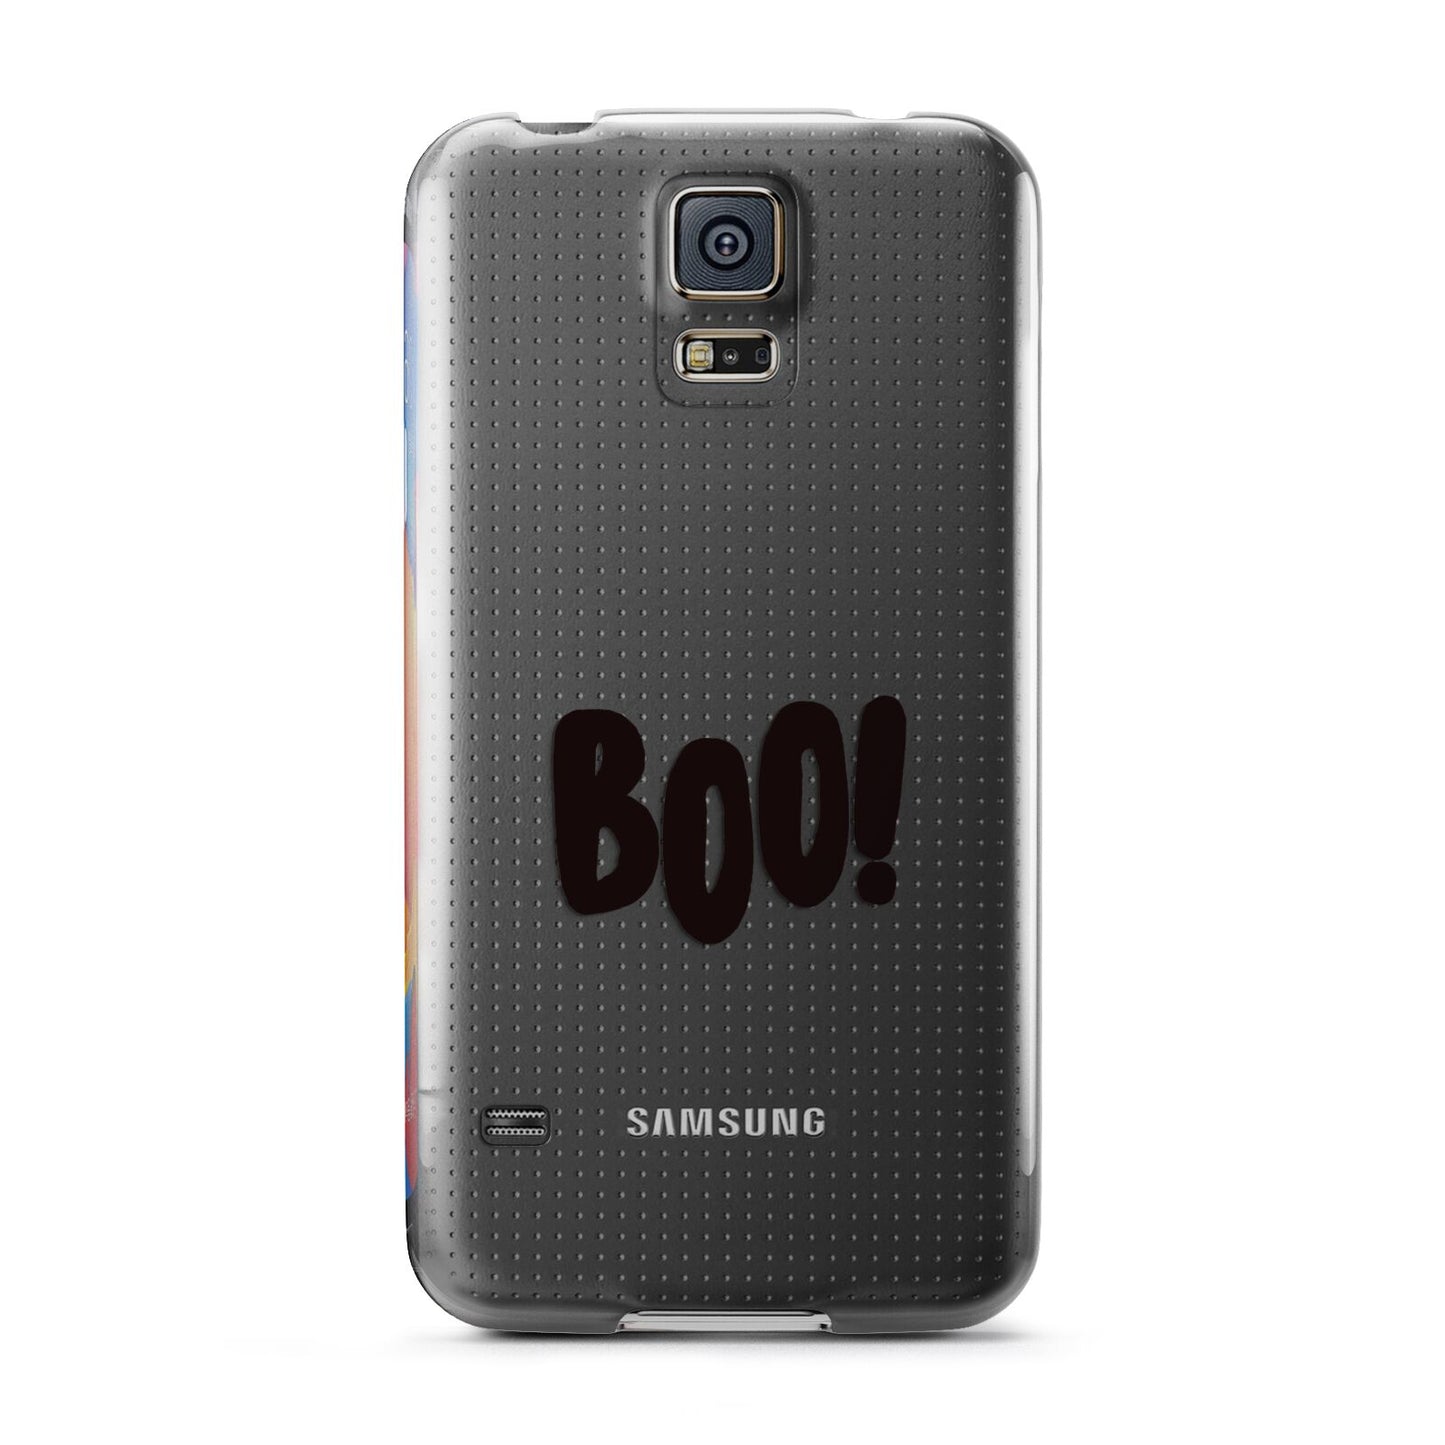 Boo Black Samsung Galaxy S5 Case